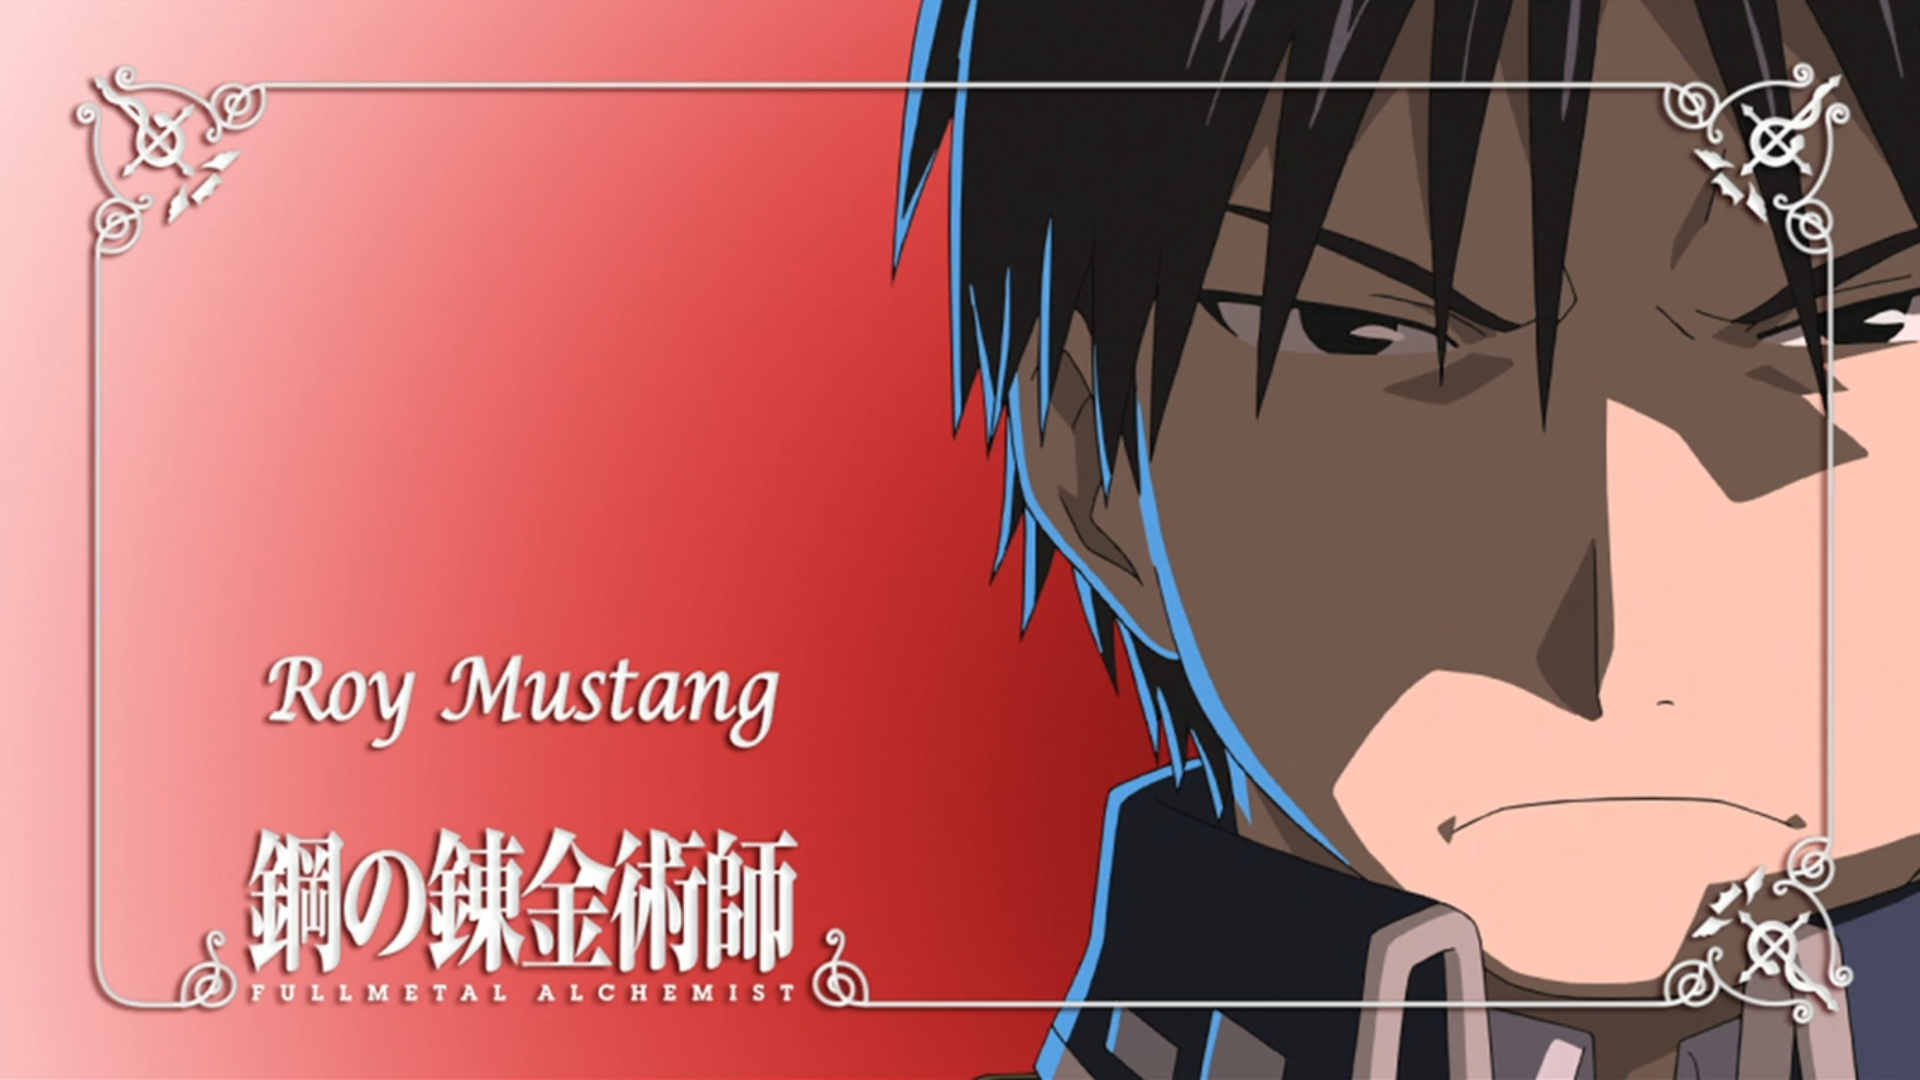 Download free Mustang Anime Car Wallpaper - MrWallpaper.com